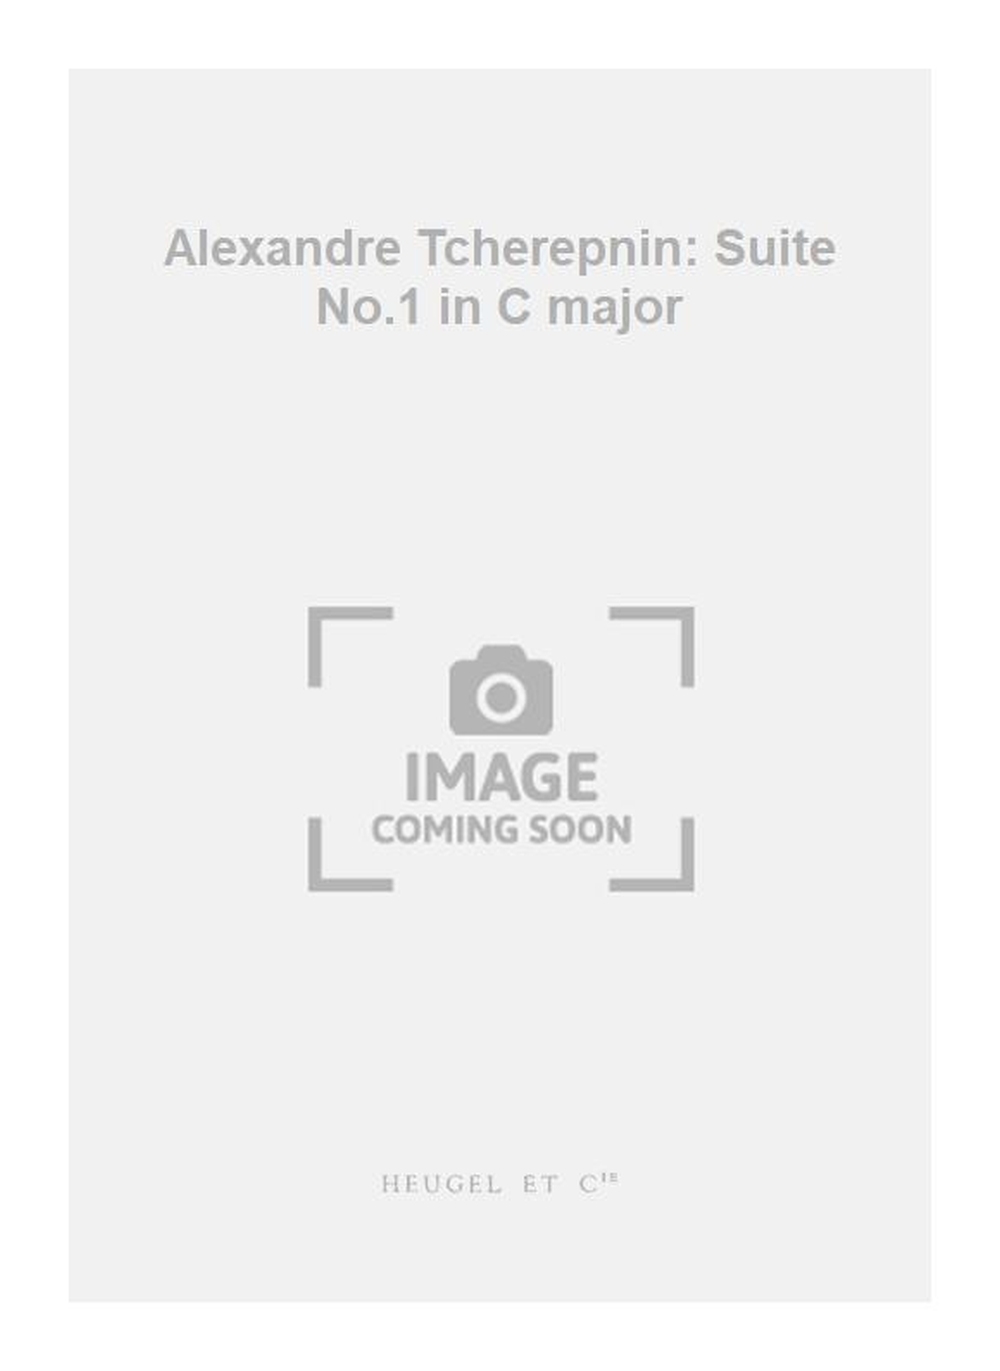 Alexander Tcherepnin: Alexandre Tcherepnin: Suite No.1 in C major